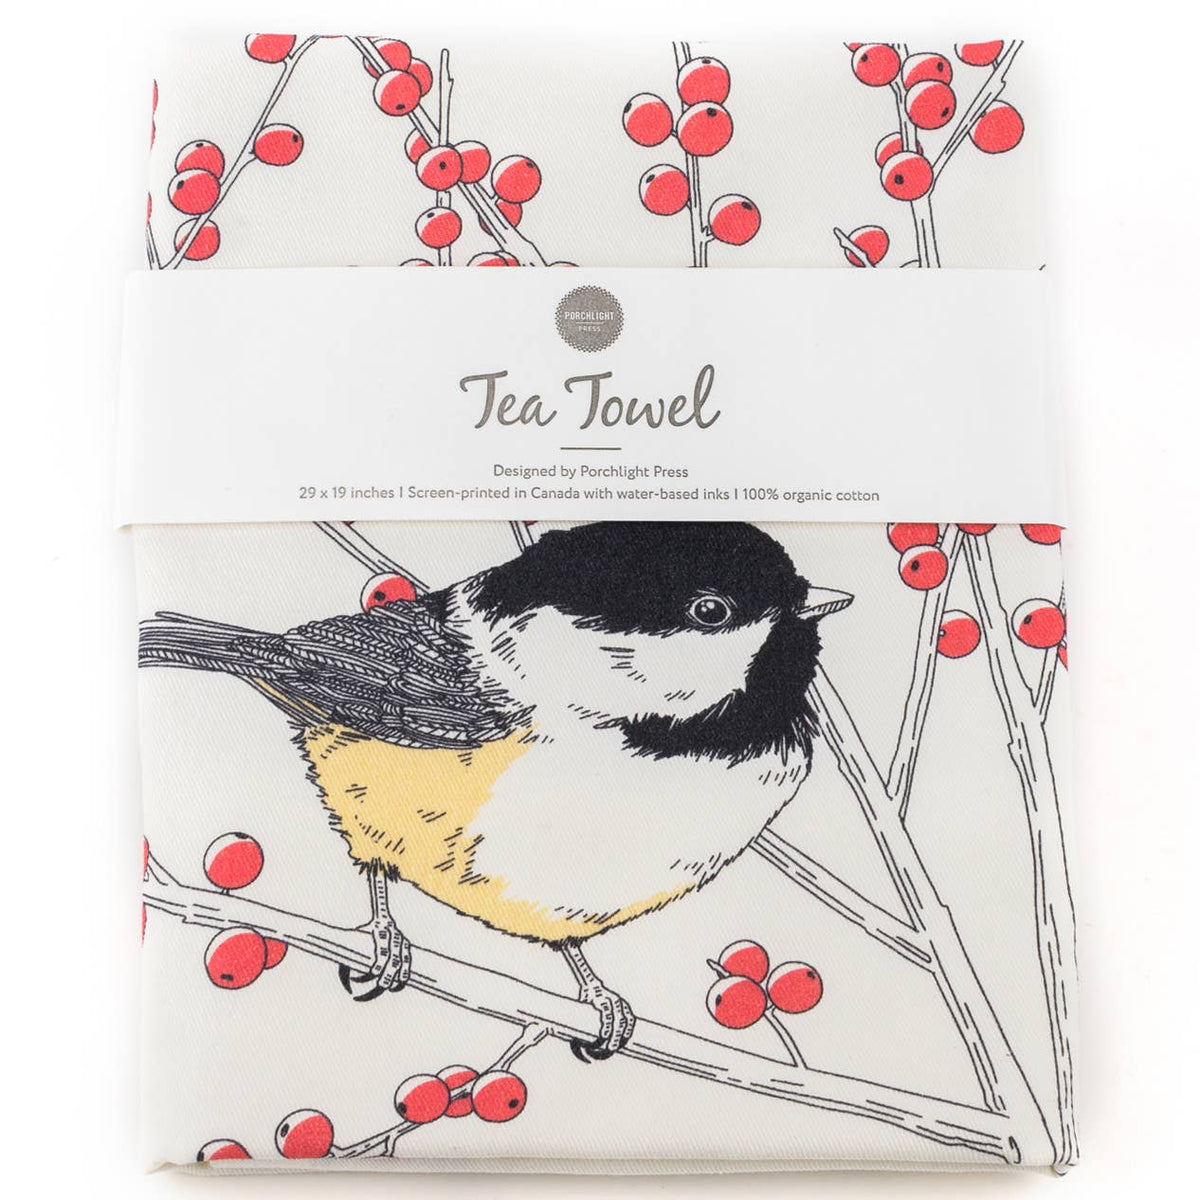 Porchlight Press Letterpress - Black-capped Chickadee Tea Towel - West Coast Birds